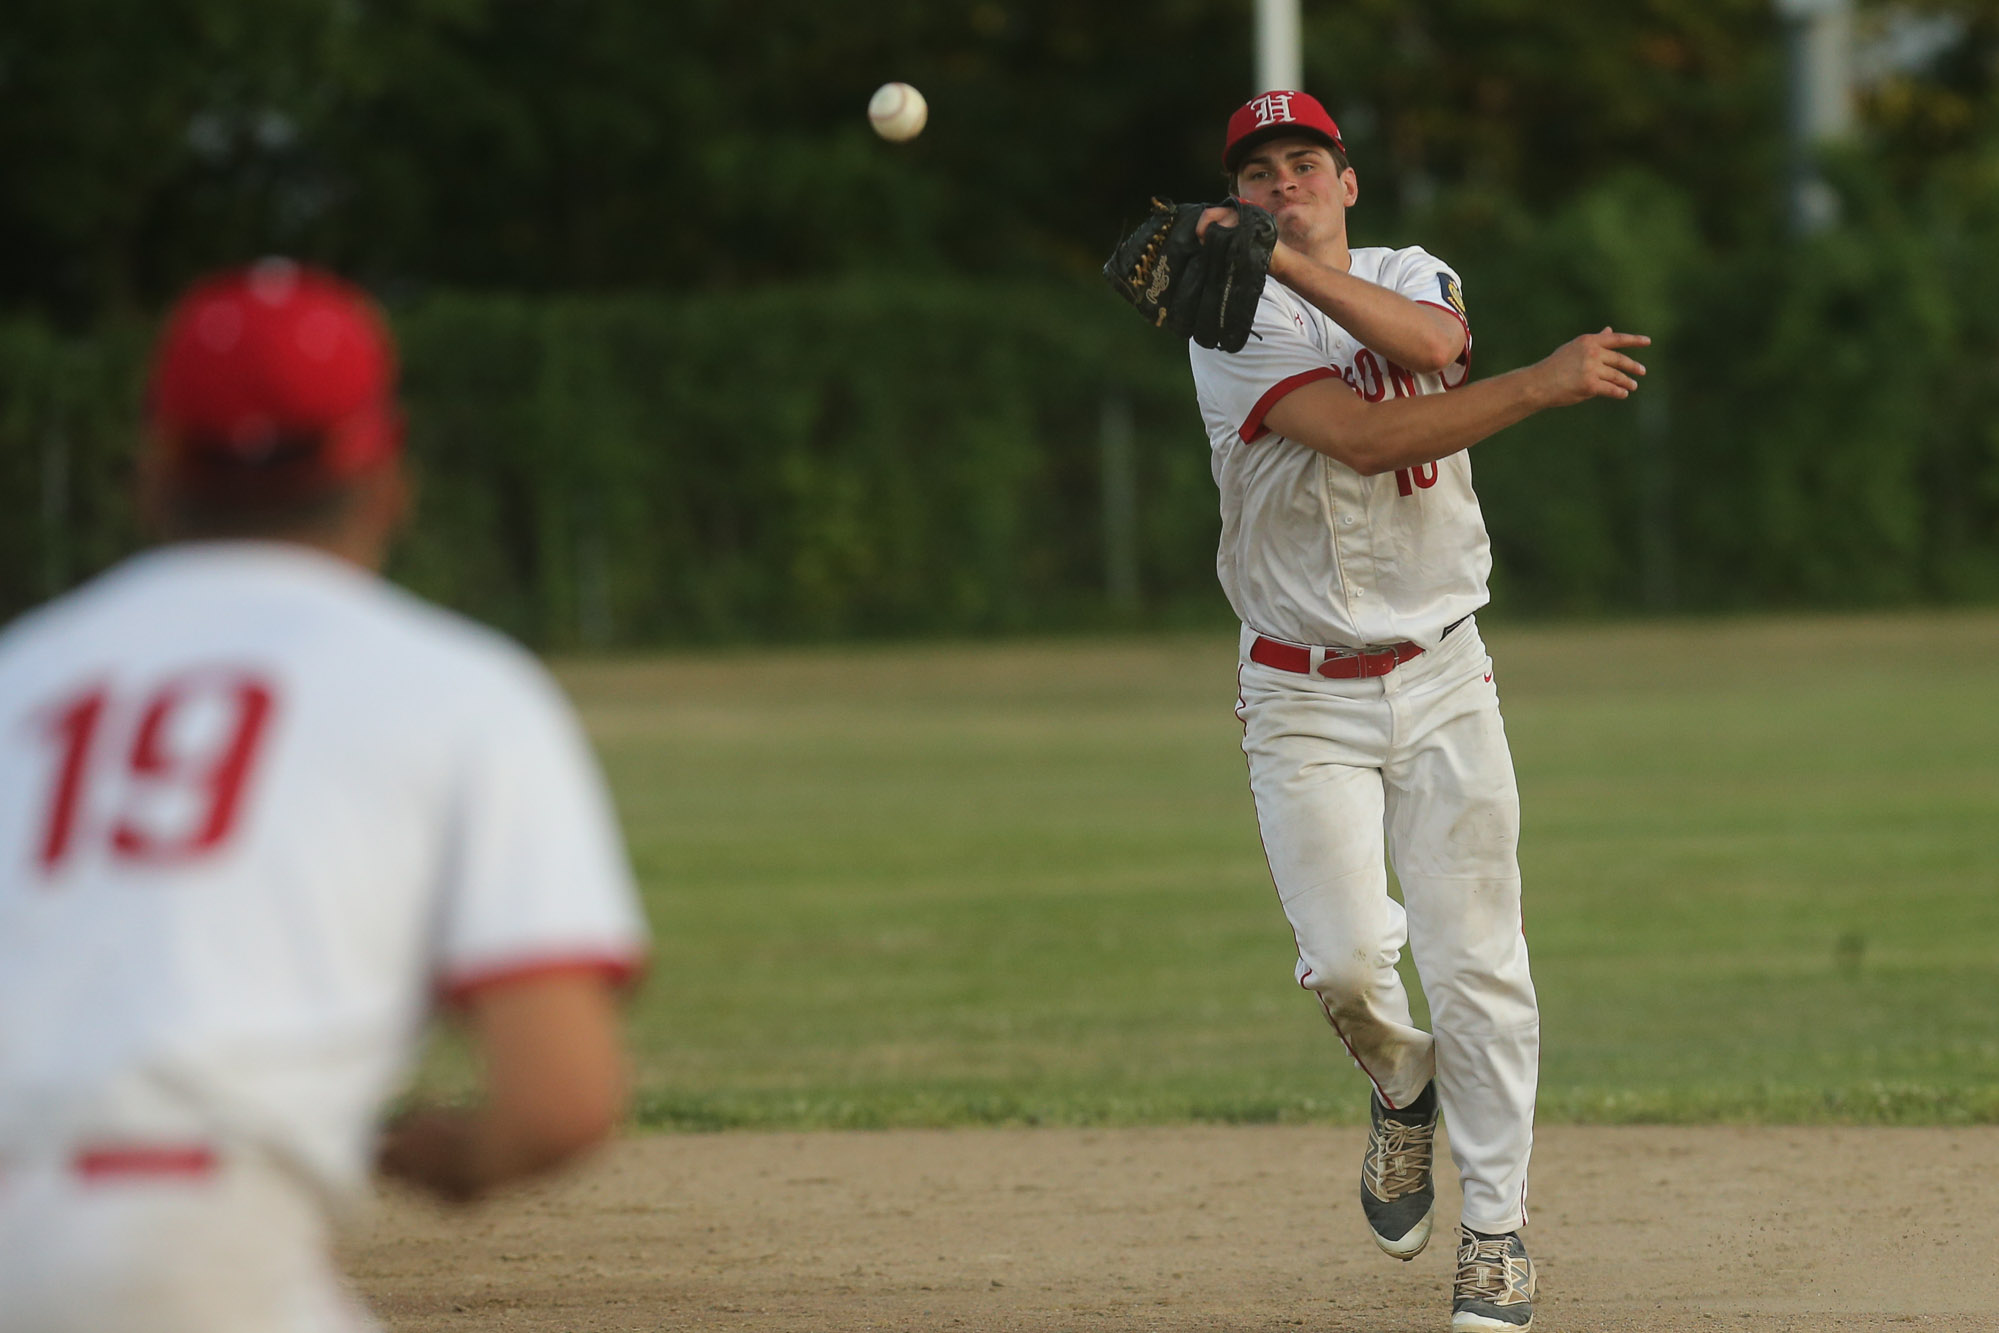 Hudson Legion baseball falls to Milford